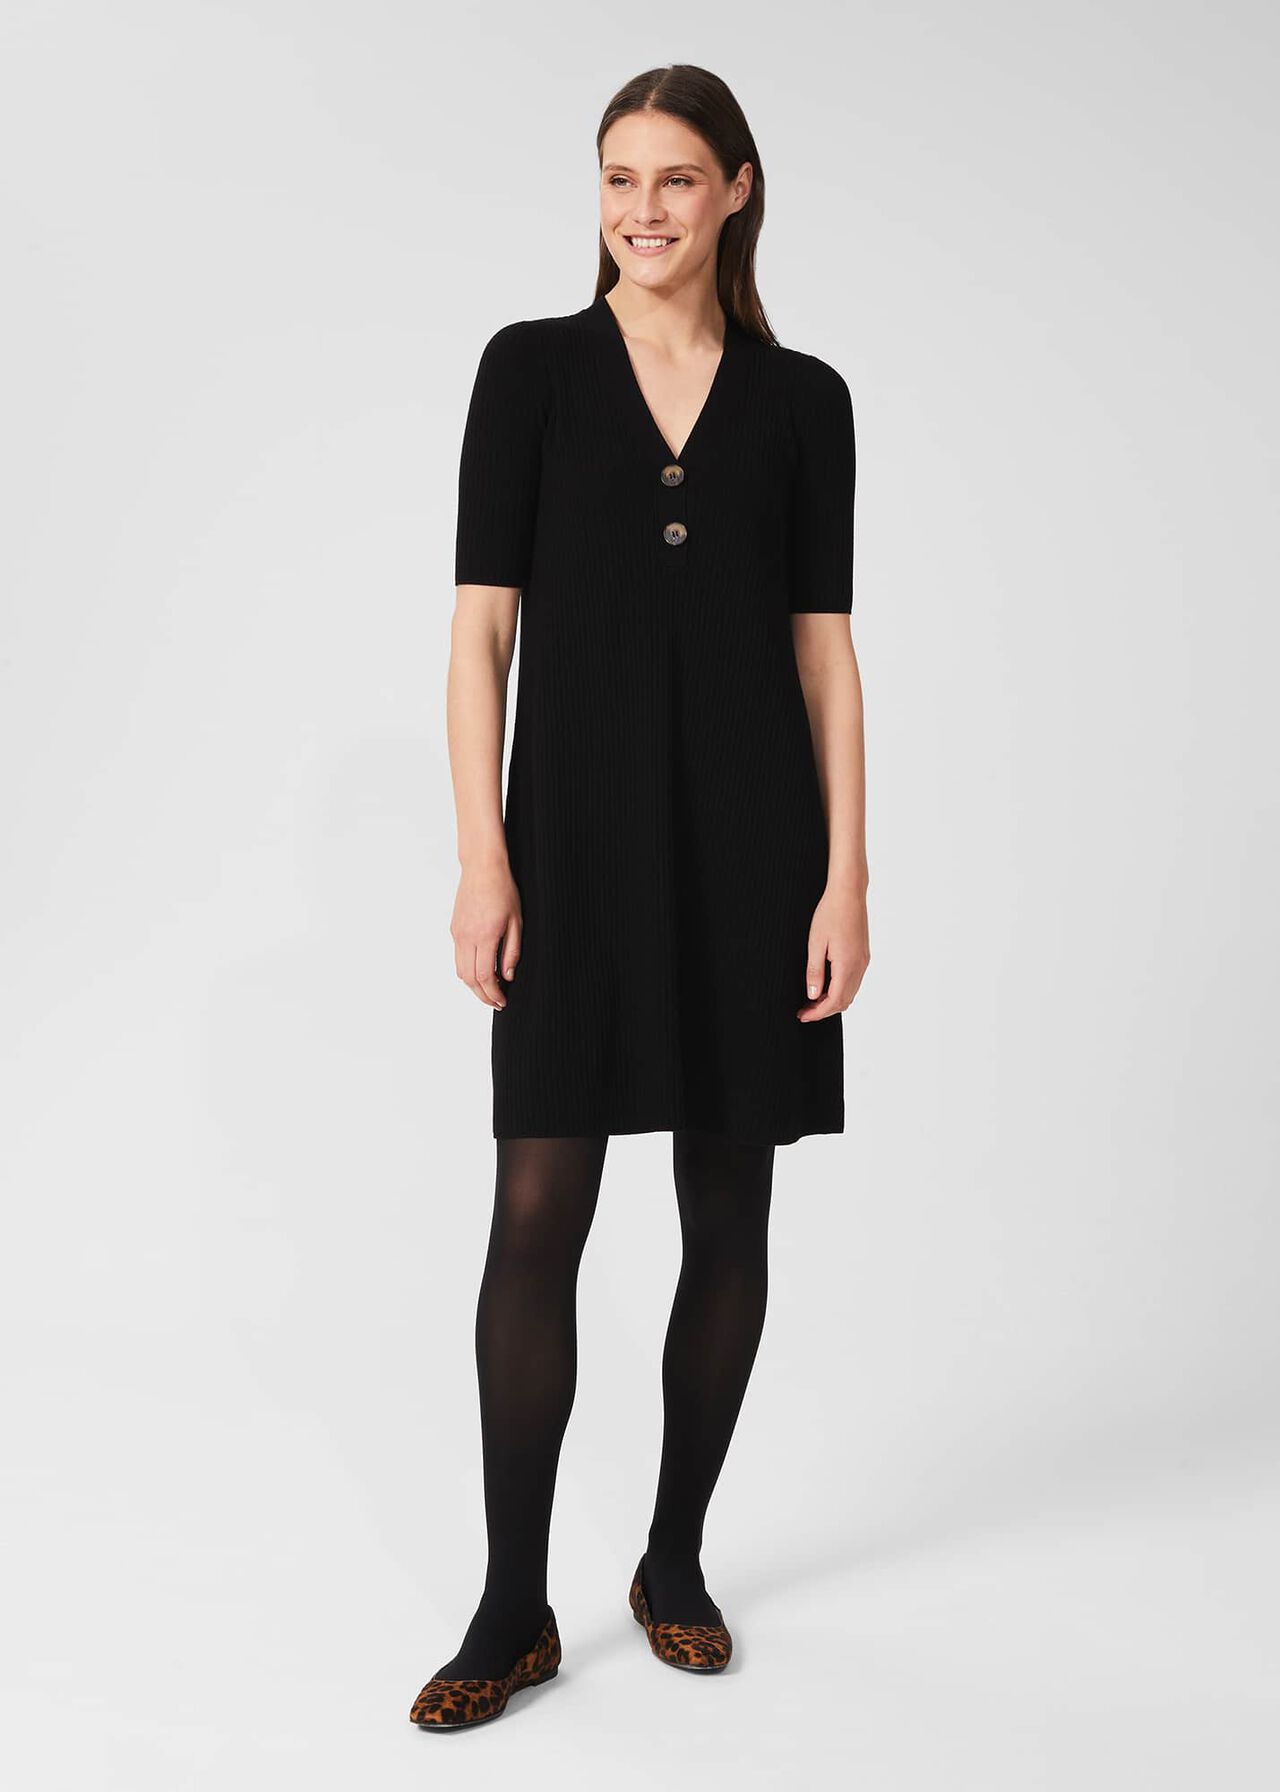 Josie Knitted Dress, Black, hi-res